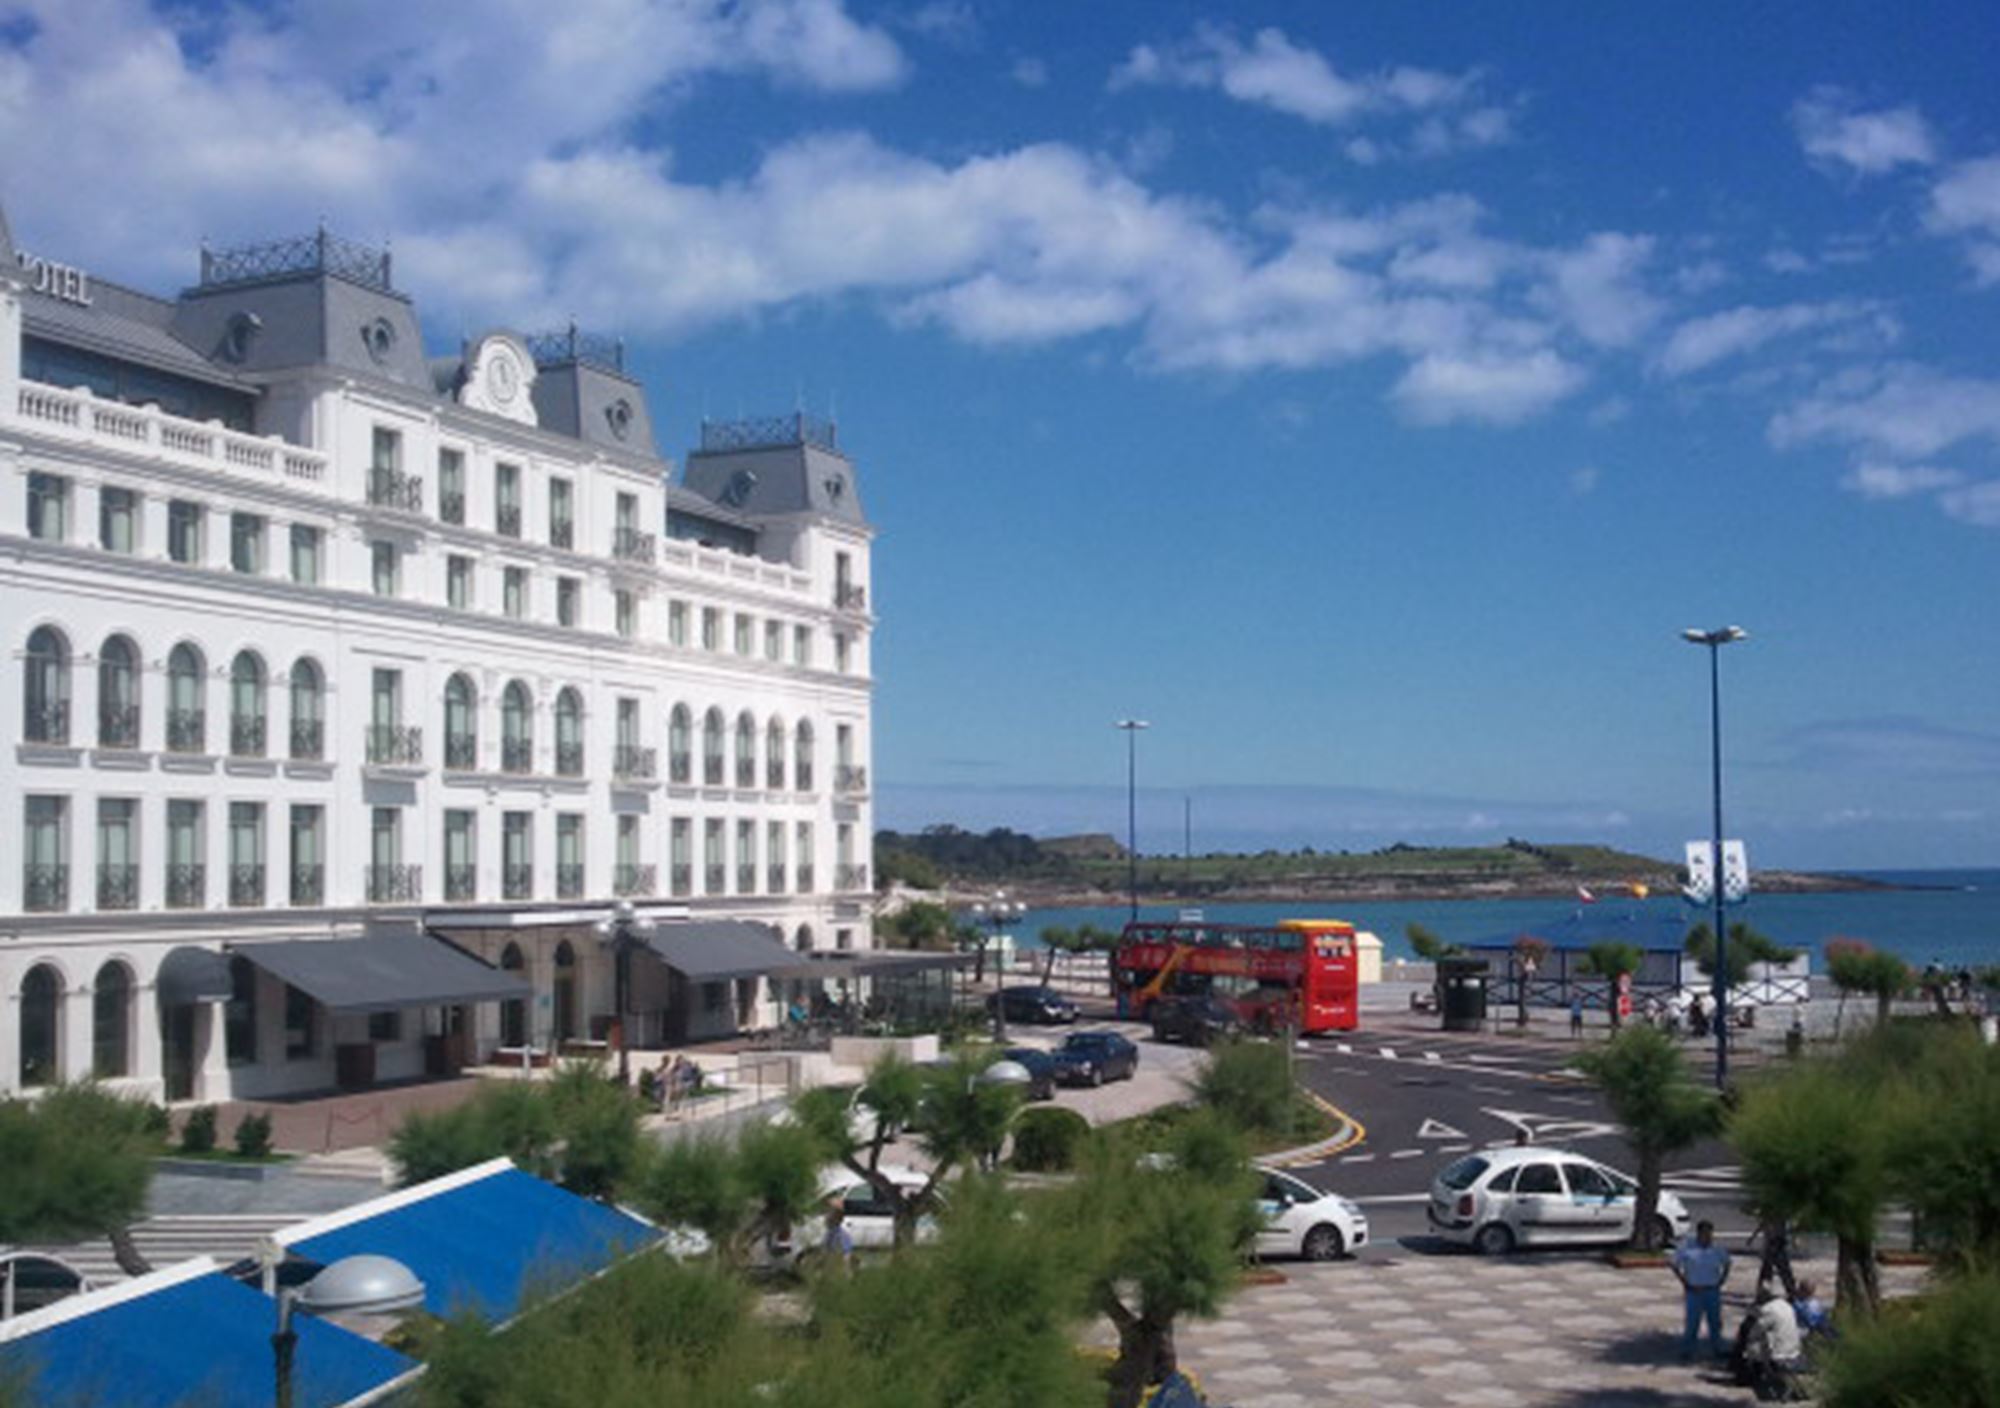 réservations visites guidées Bus Touristique City Sightseeing Santander billets visiter